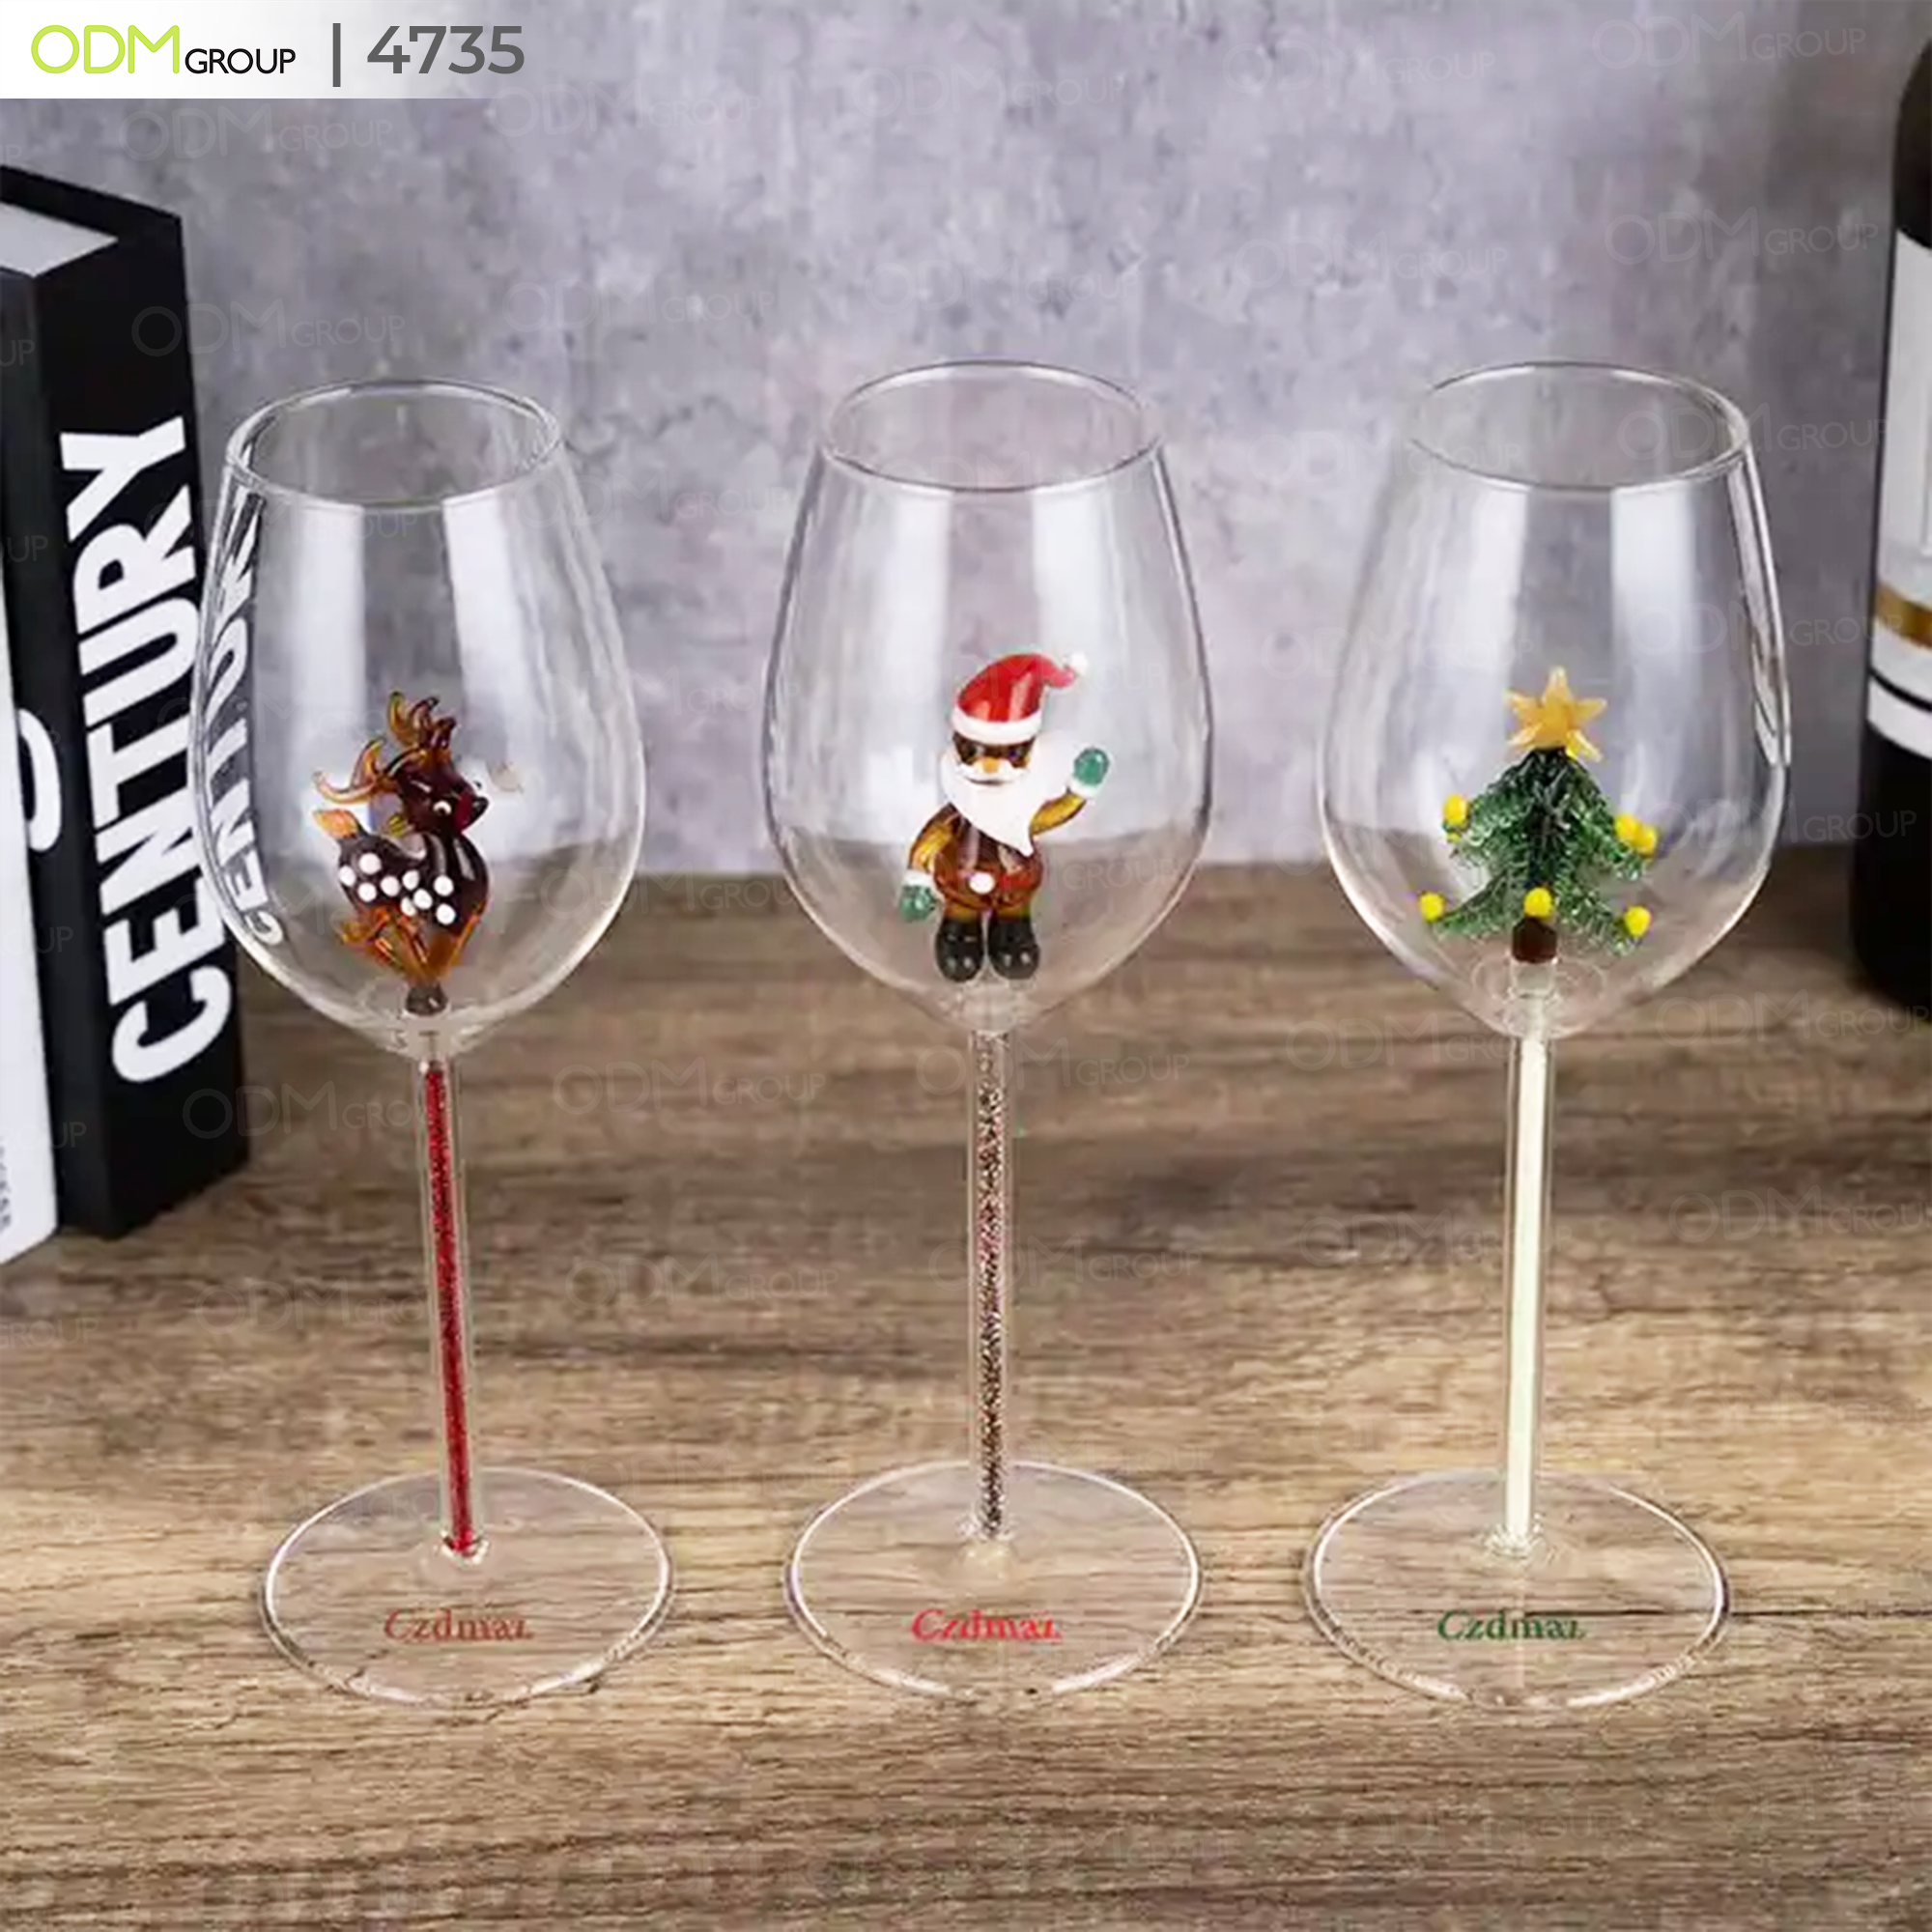 Custom Wine Glasses